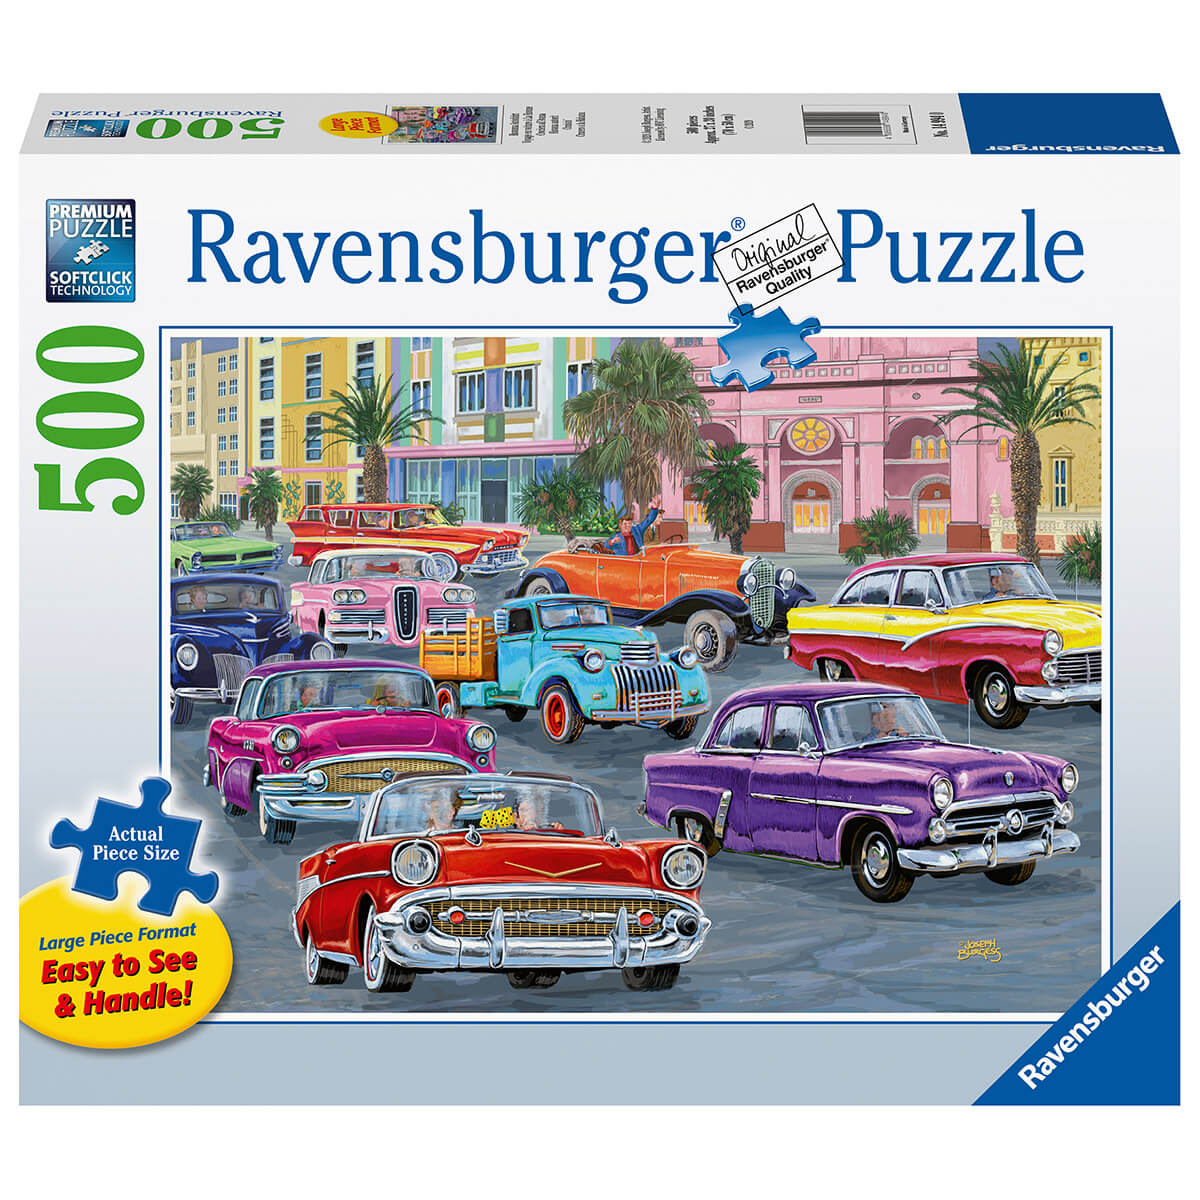 Ravensburger Cruisin' 500 Piece Large Format Puzzle